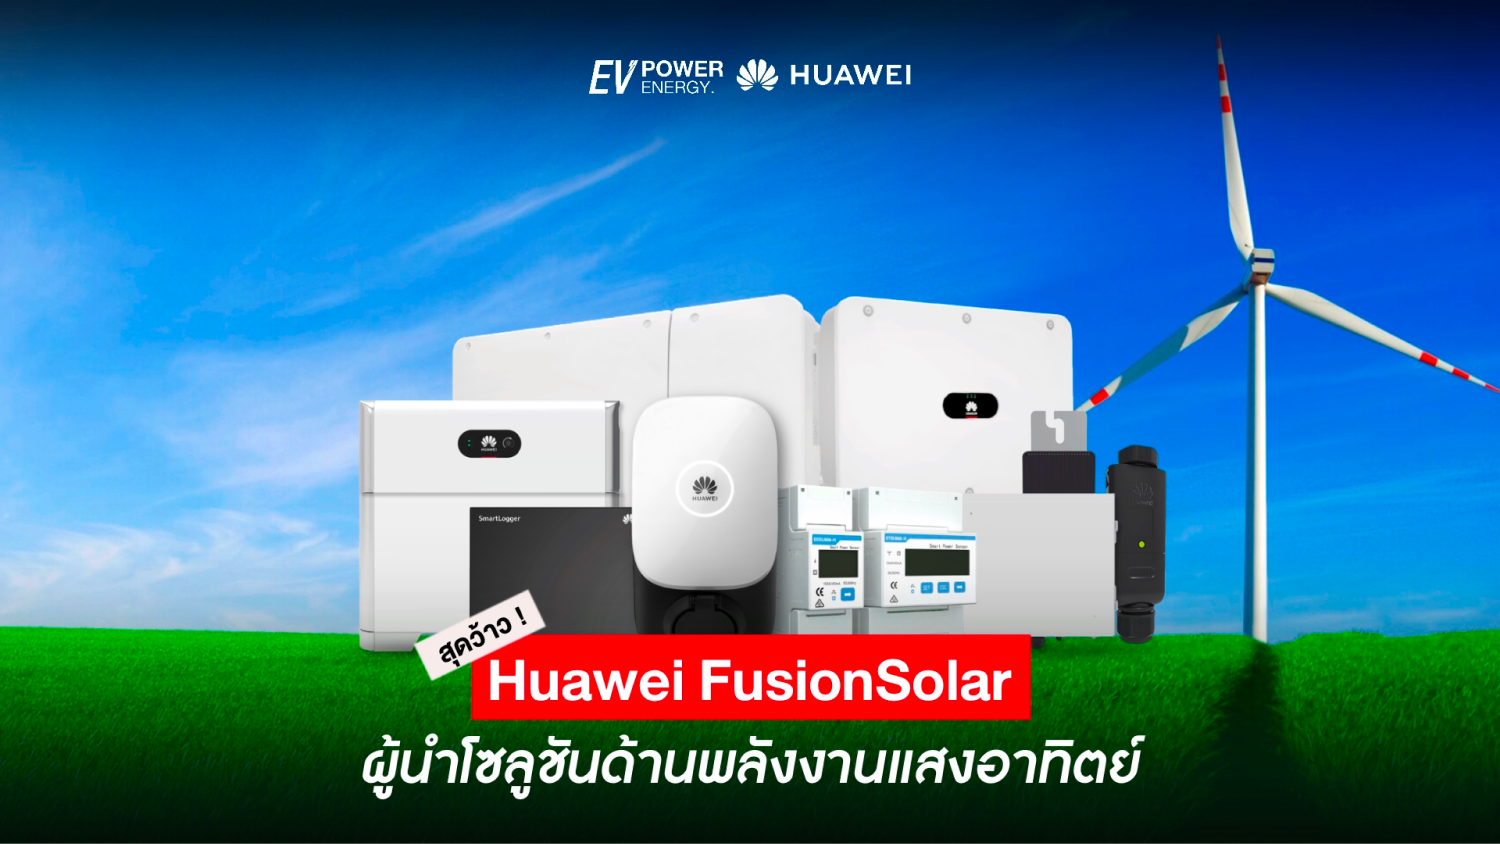 Huawei FusionSolar ผู้นำโซลูชั่นด้านพลังงานแสงอาทิตย์